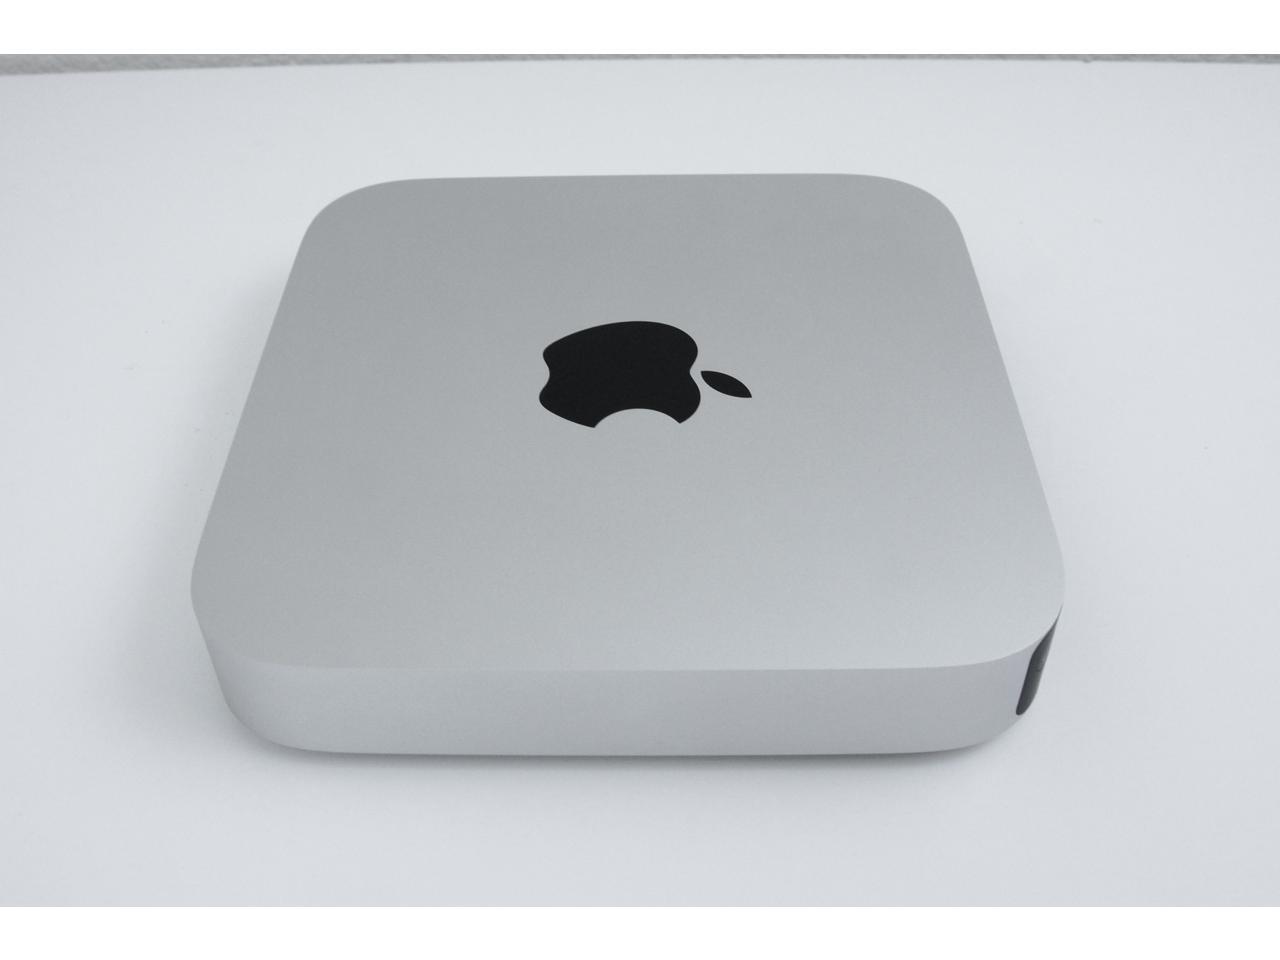 apple a1347 mac mini review